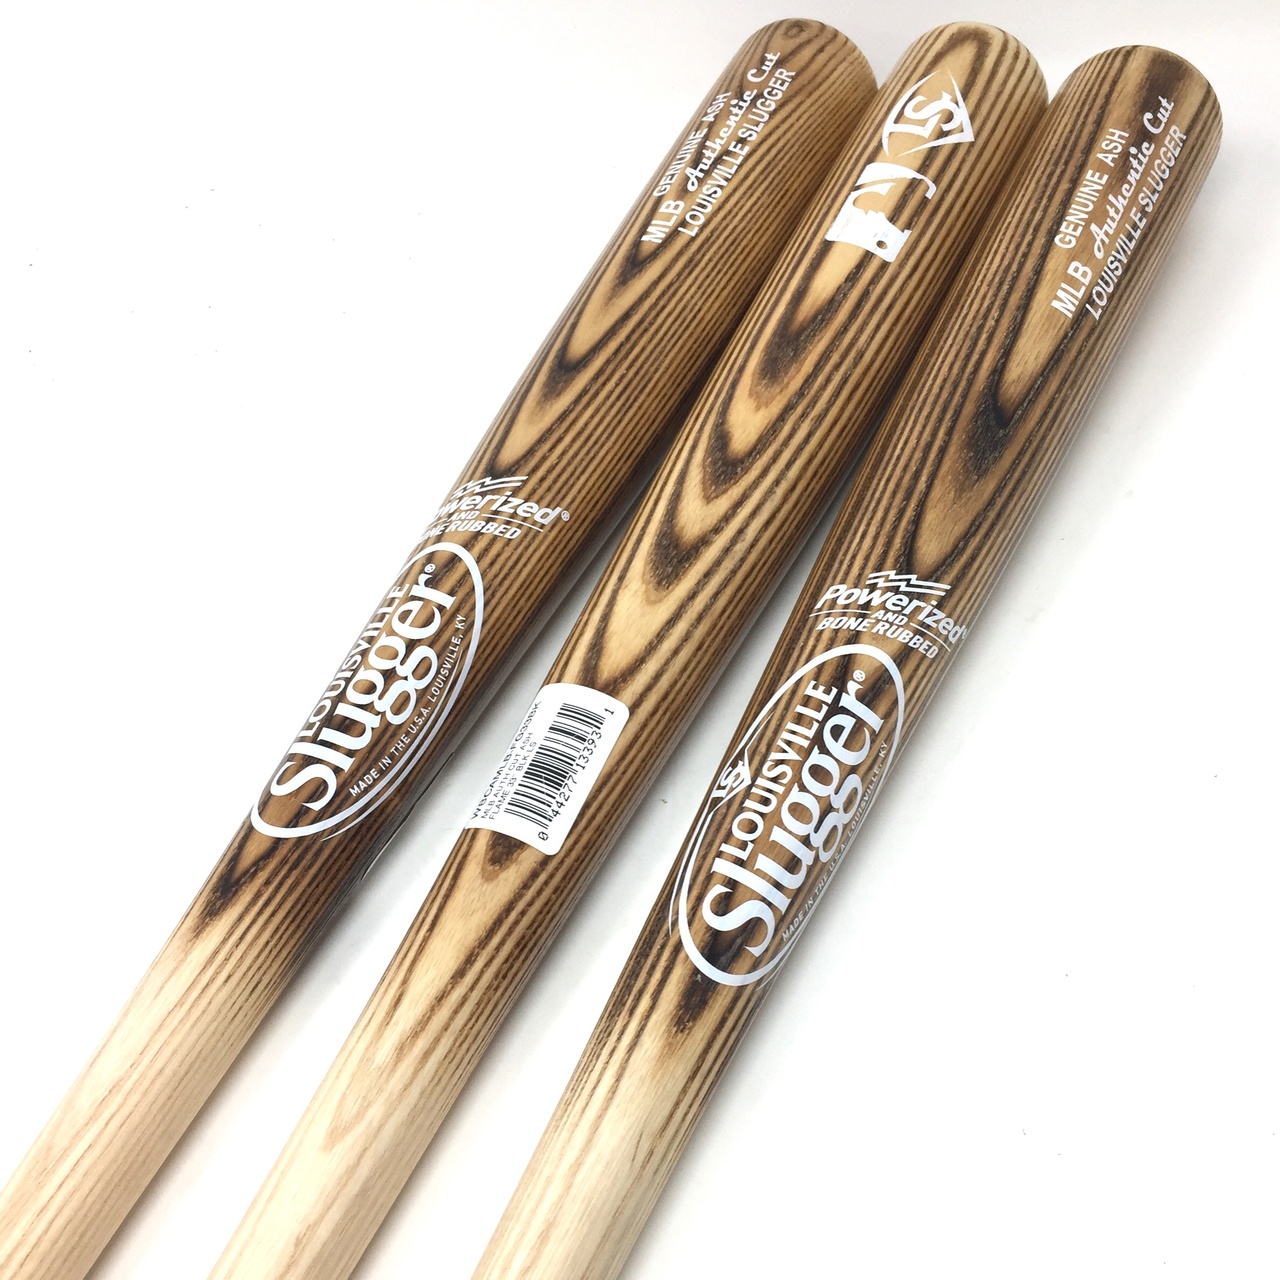 louisville-slugger-wood-baseball-bat-pack-33-inch-3-bats-mlb-ash BATPACK-0014 Louisville Does not apply 33 inch wood baseball bats by Louisville Slugger. MLB Authentic Cut